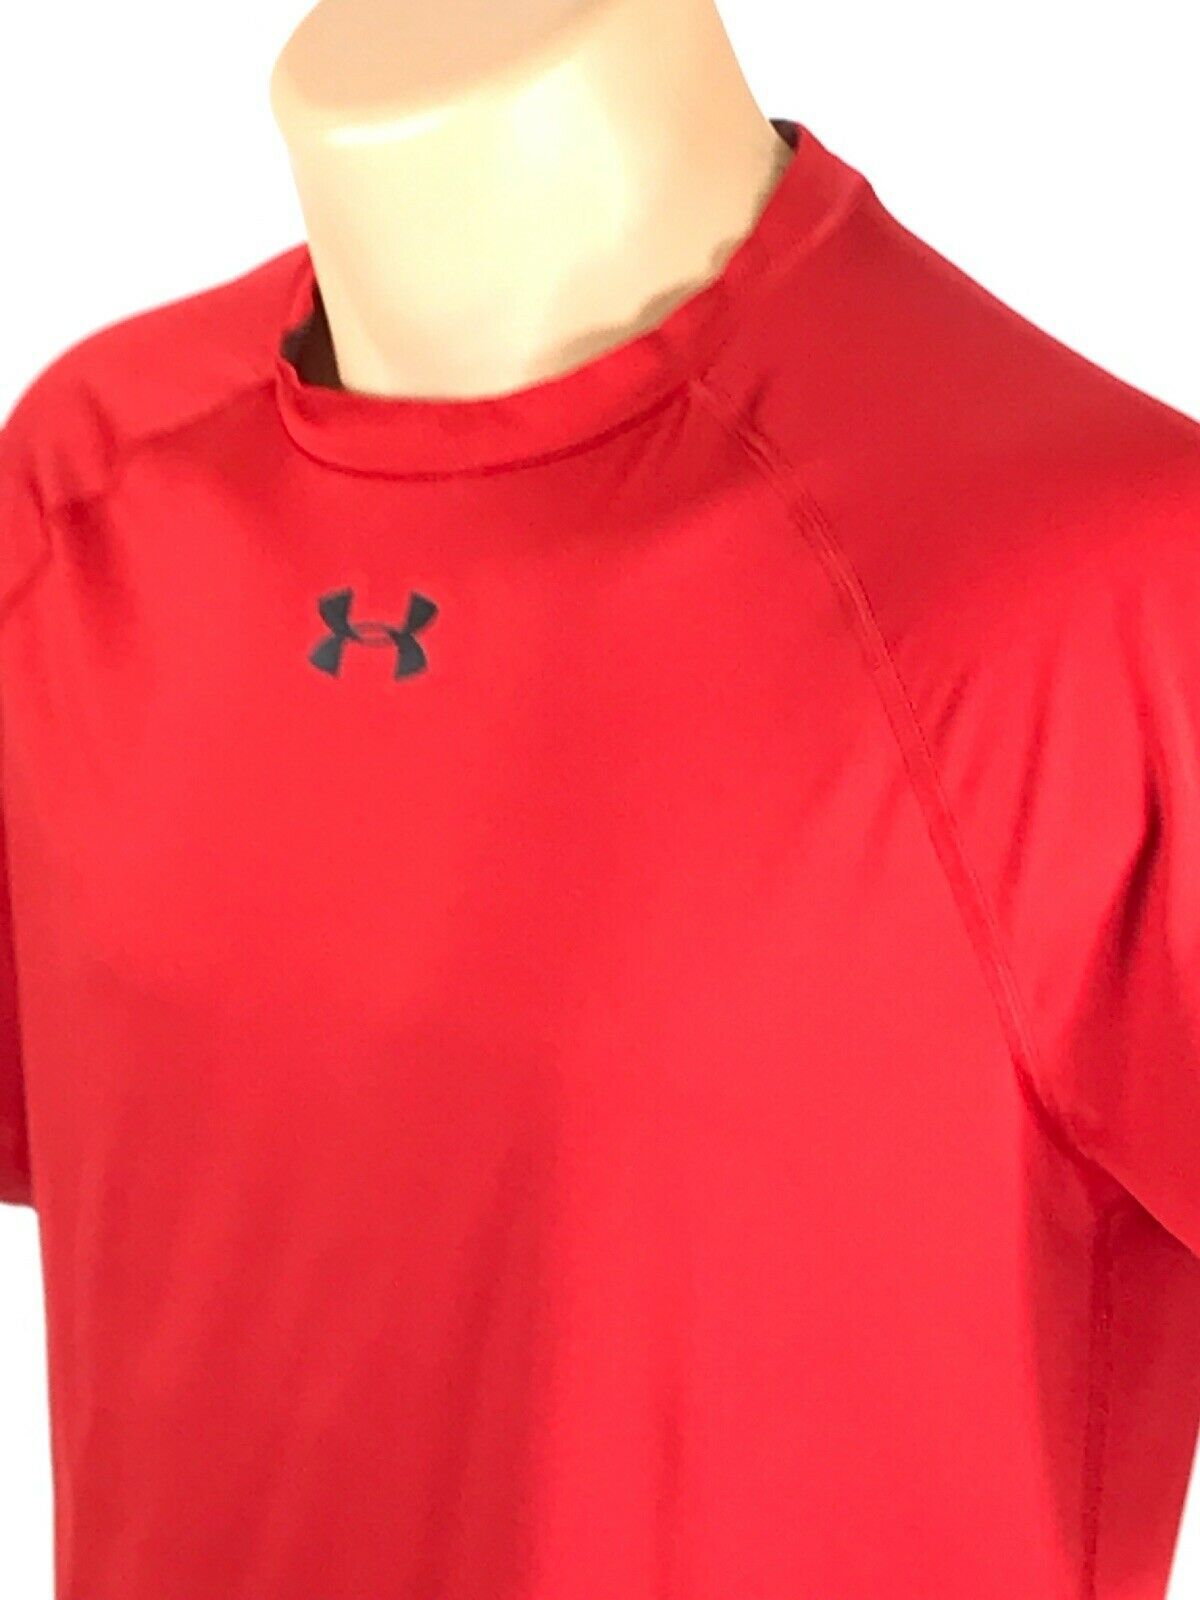 Under Armour XL Heatgear Compression Shirt Mens Size XL Red Short ...